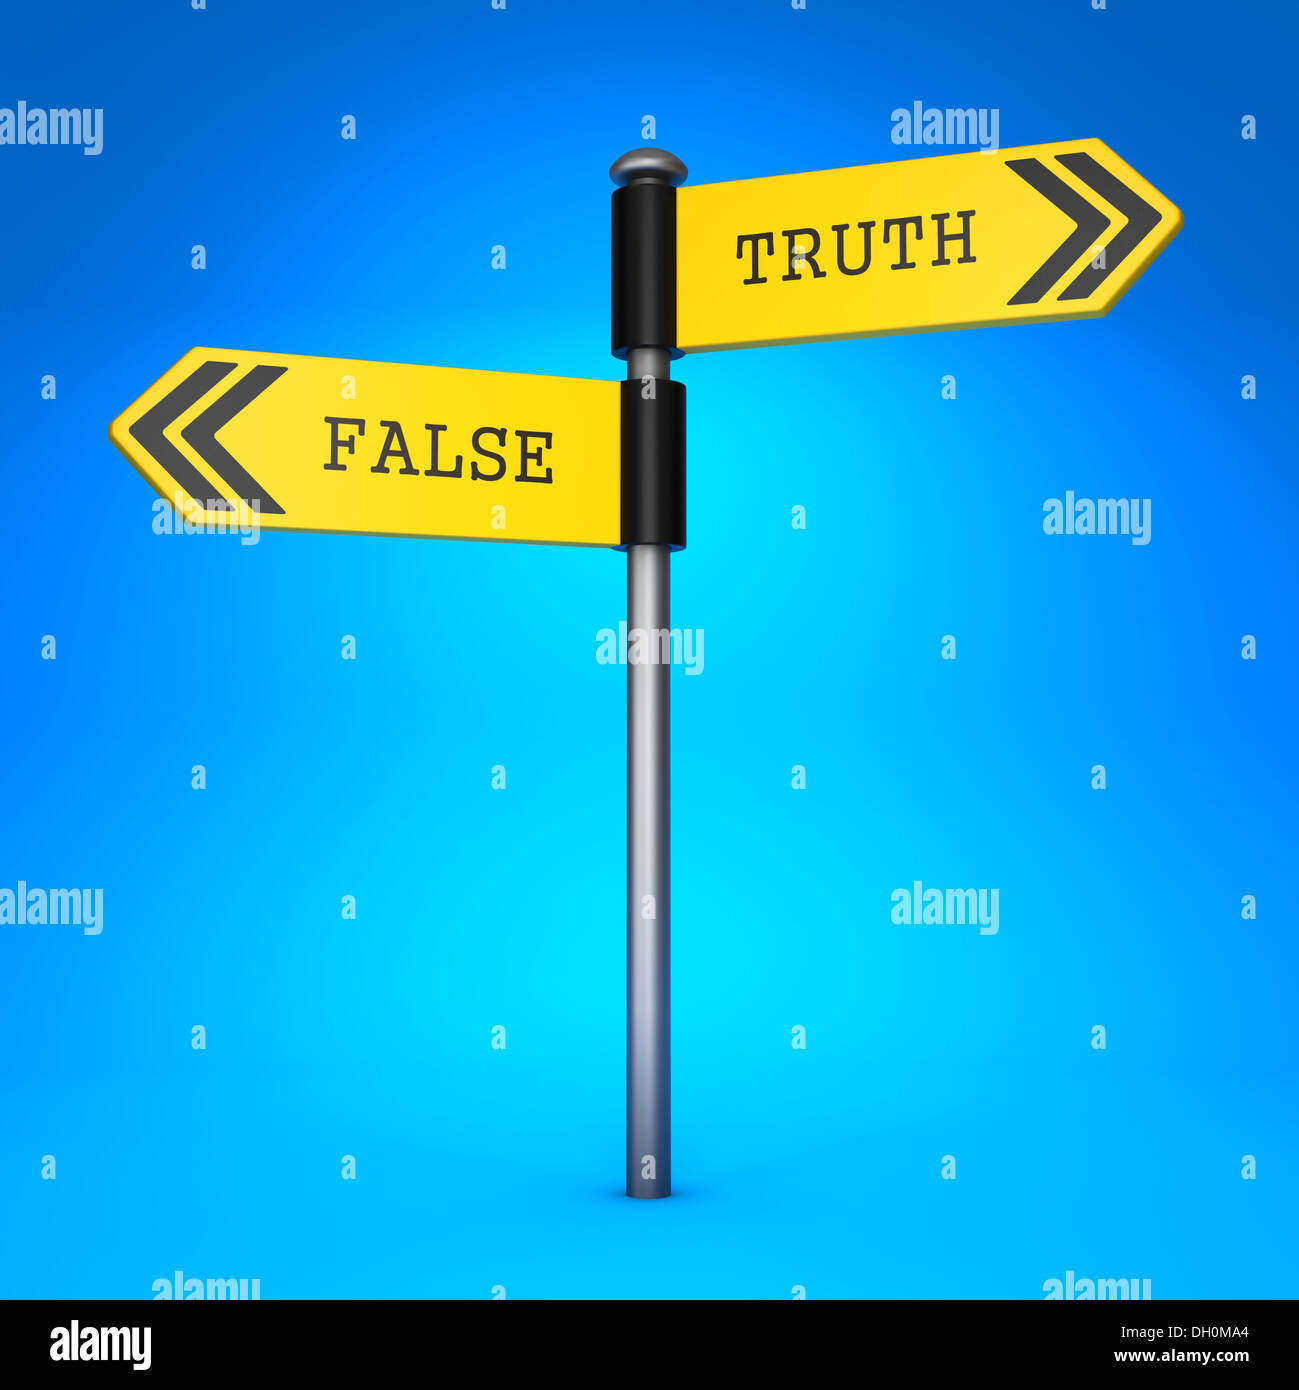 False or Truth. Concept of Choice. Stock Photo